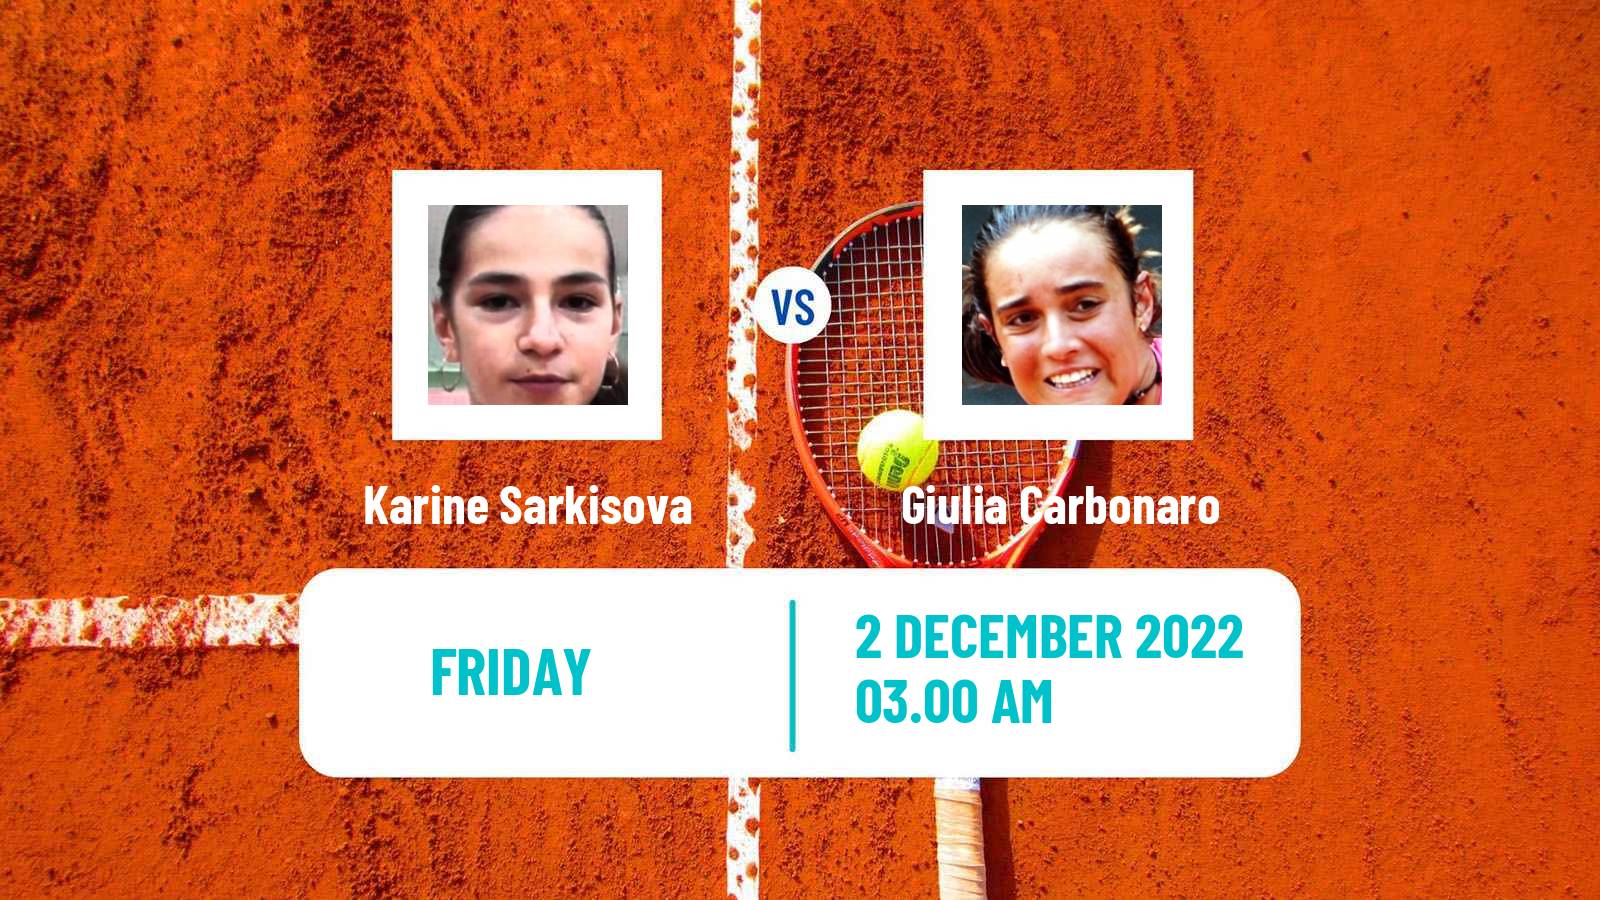 Tennis ITF Tournaments Karine Sarkisova - Giulia Carbonaro